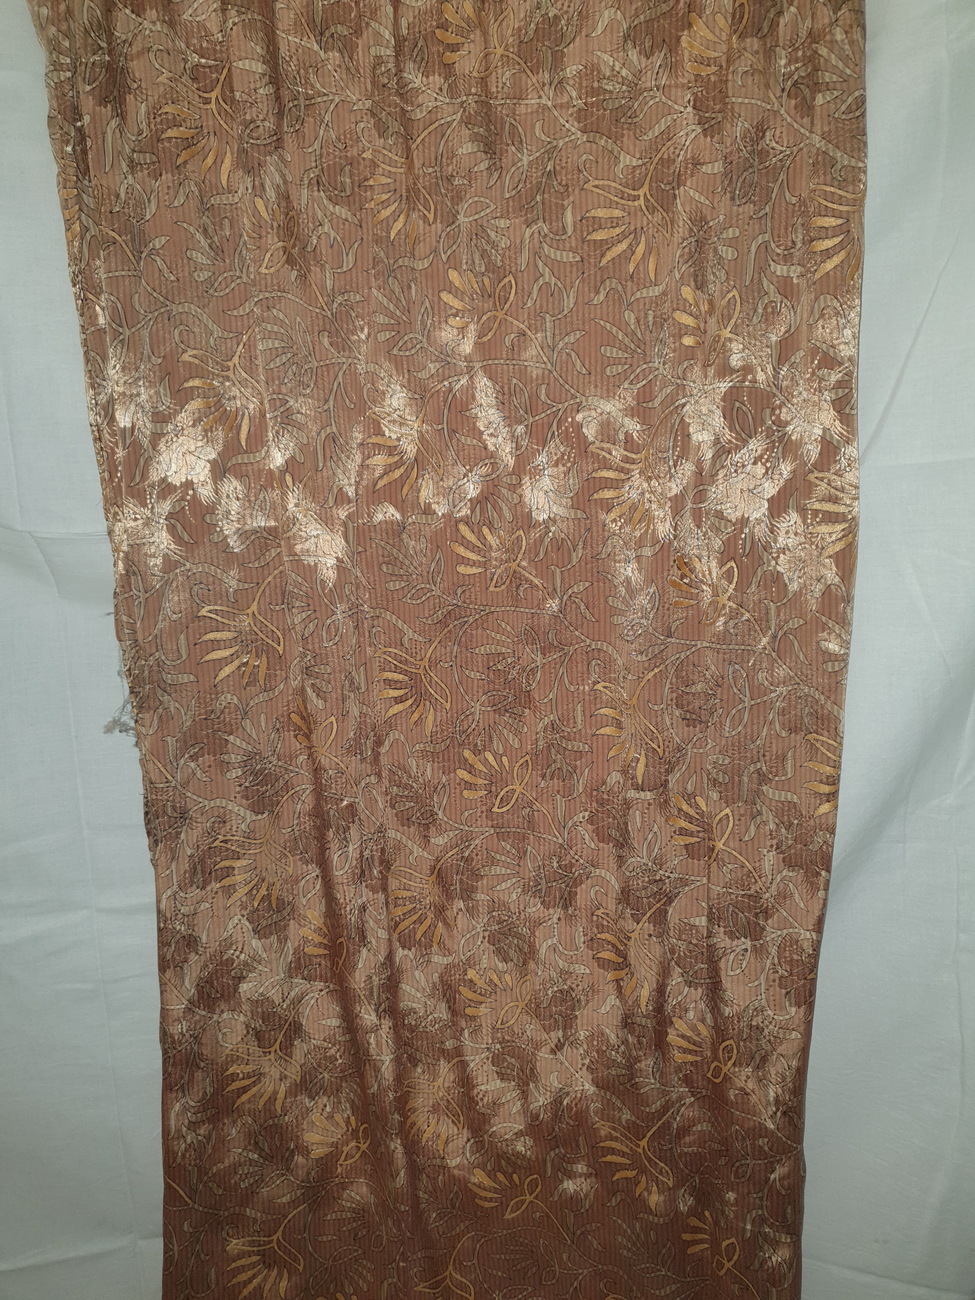 Foulard made in india 100% viscosa con borsa porta foulard fantasia 8